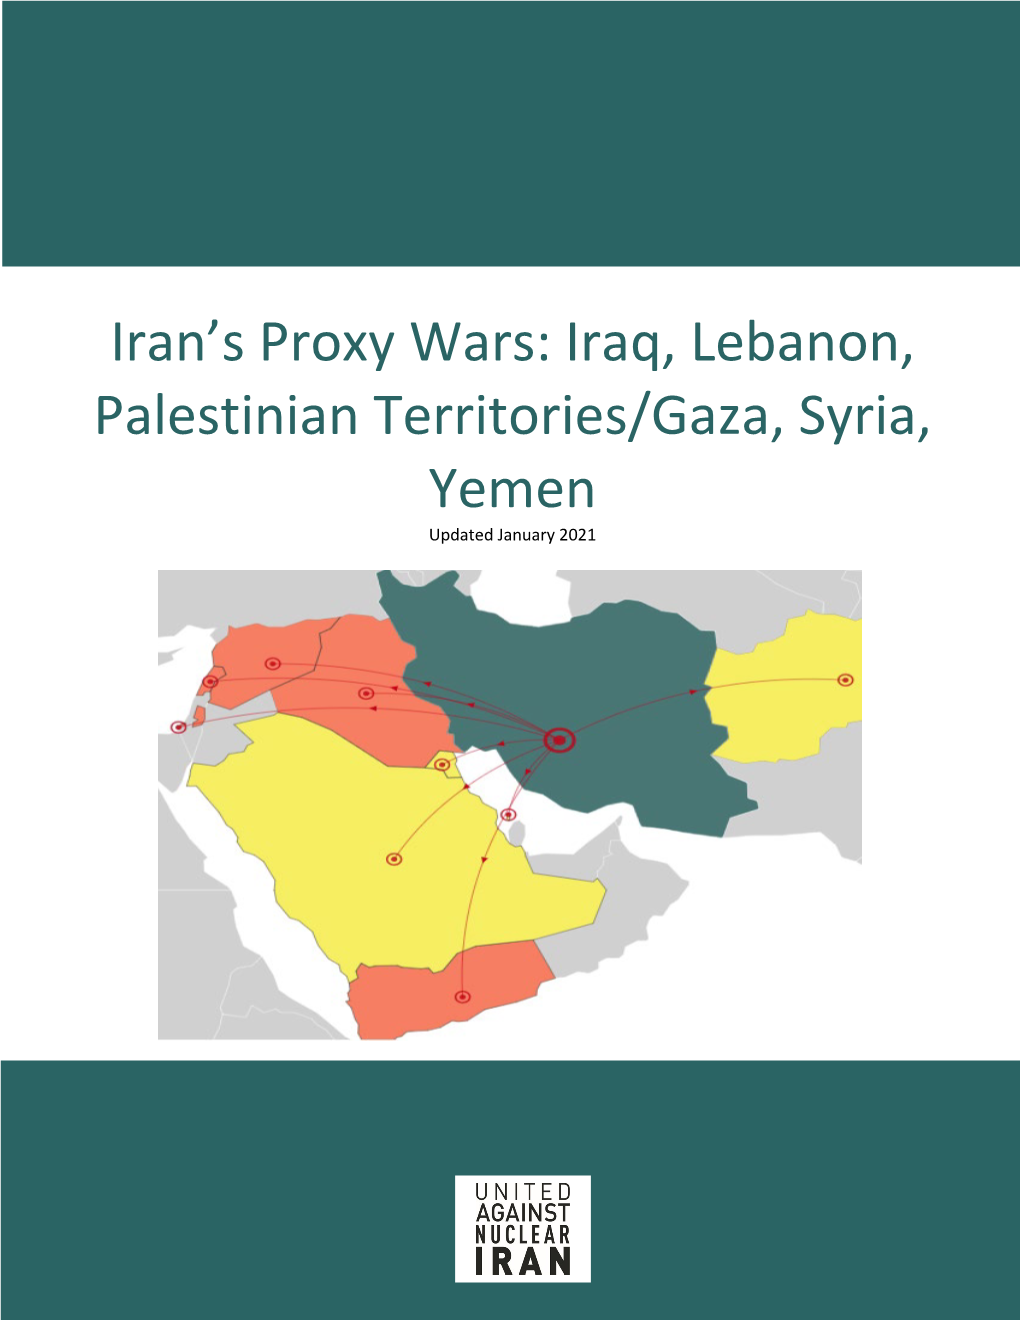 Iran's Proxy Wars: Iraq, Lebanon, Palestinian Territories/Gaza, Syria